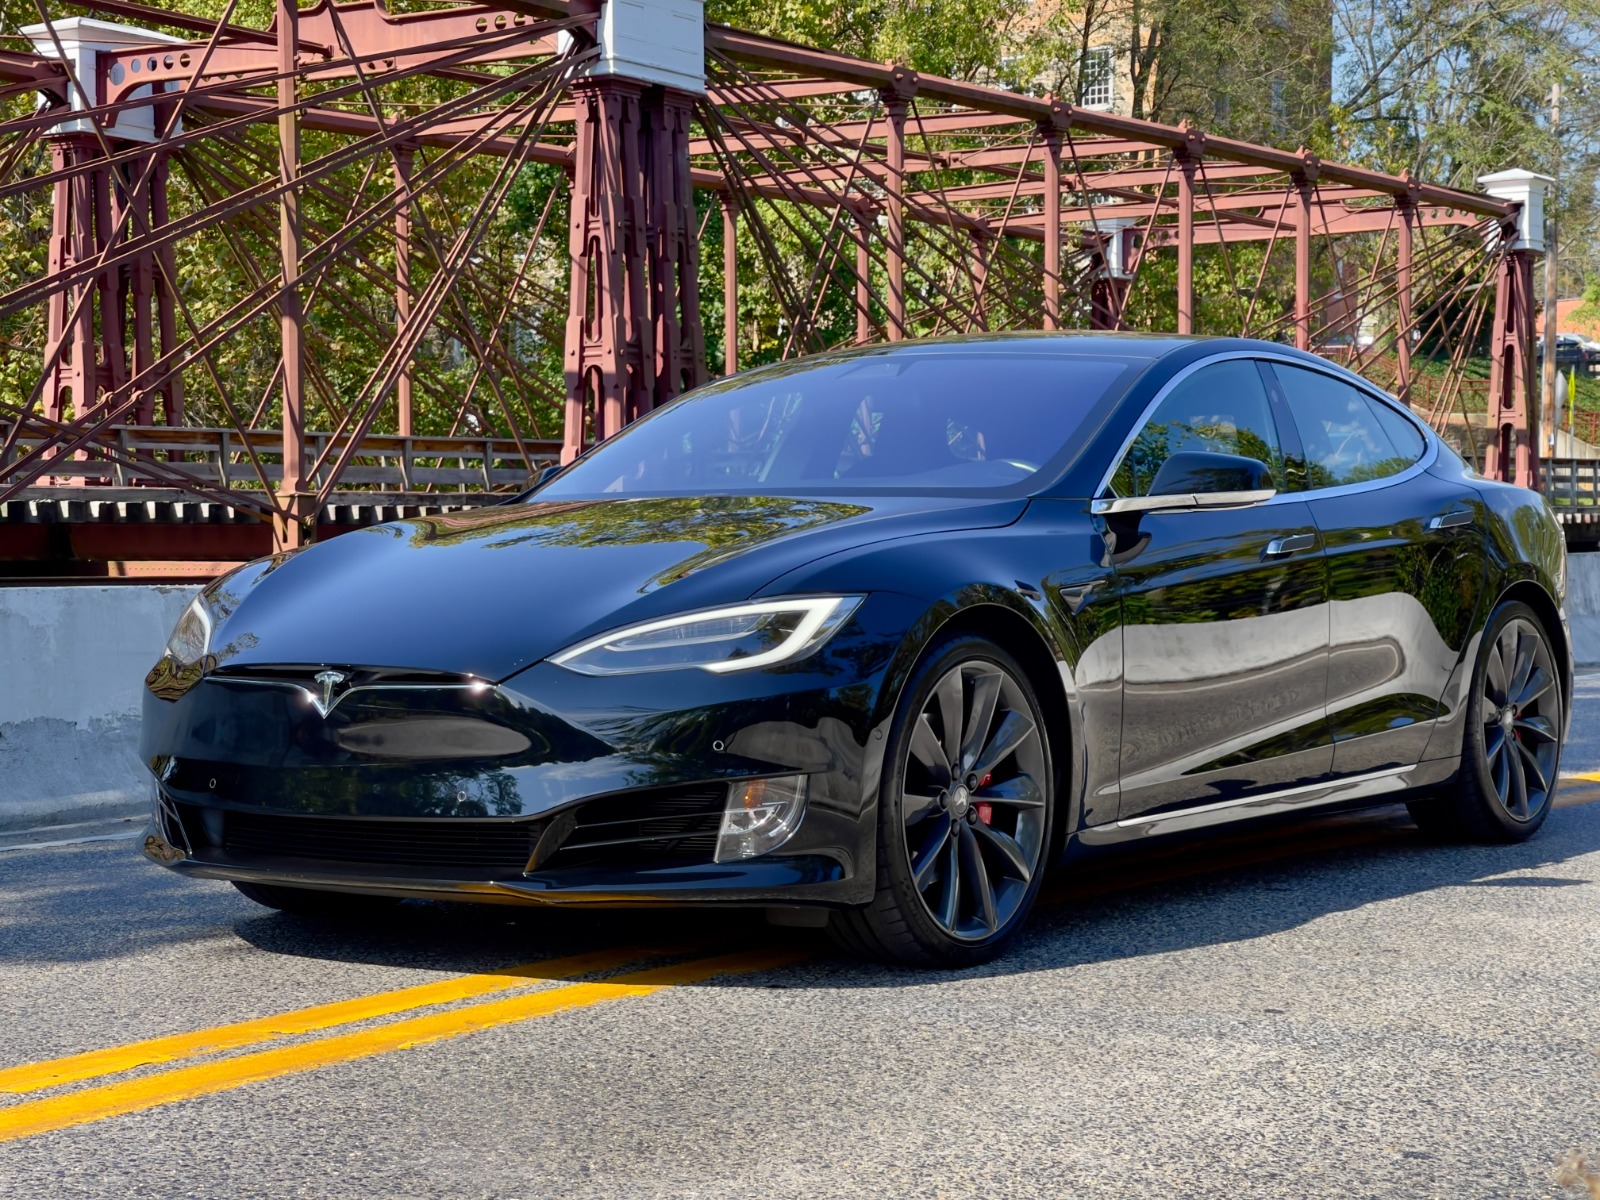 2017 Tesla Model S P100DL - Find My Electric